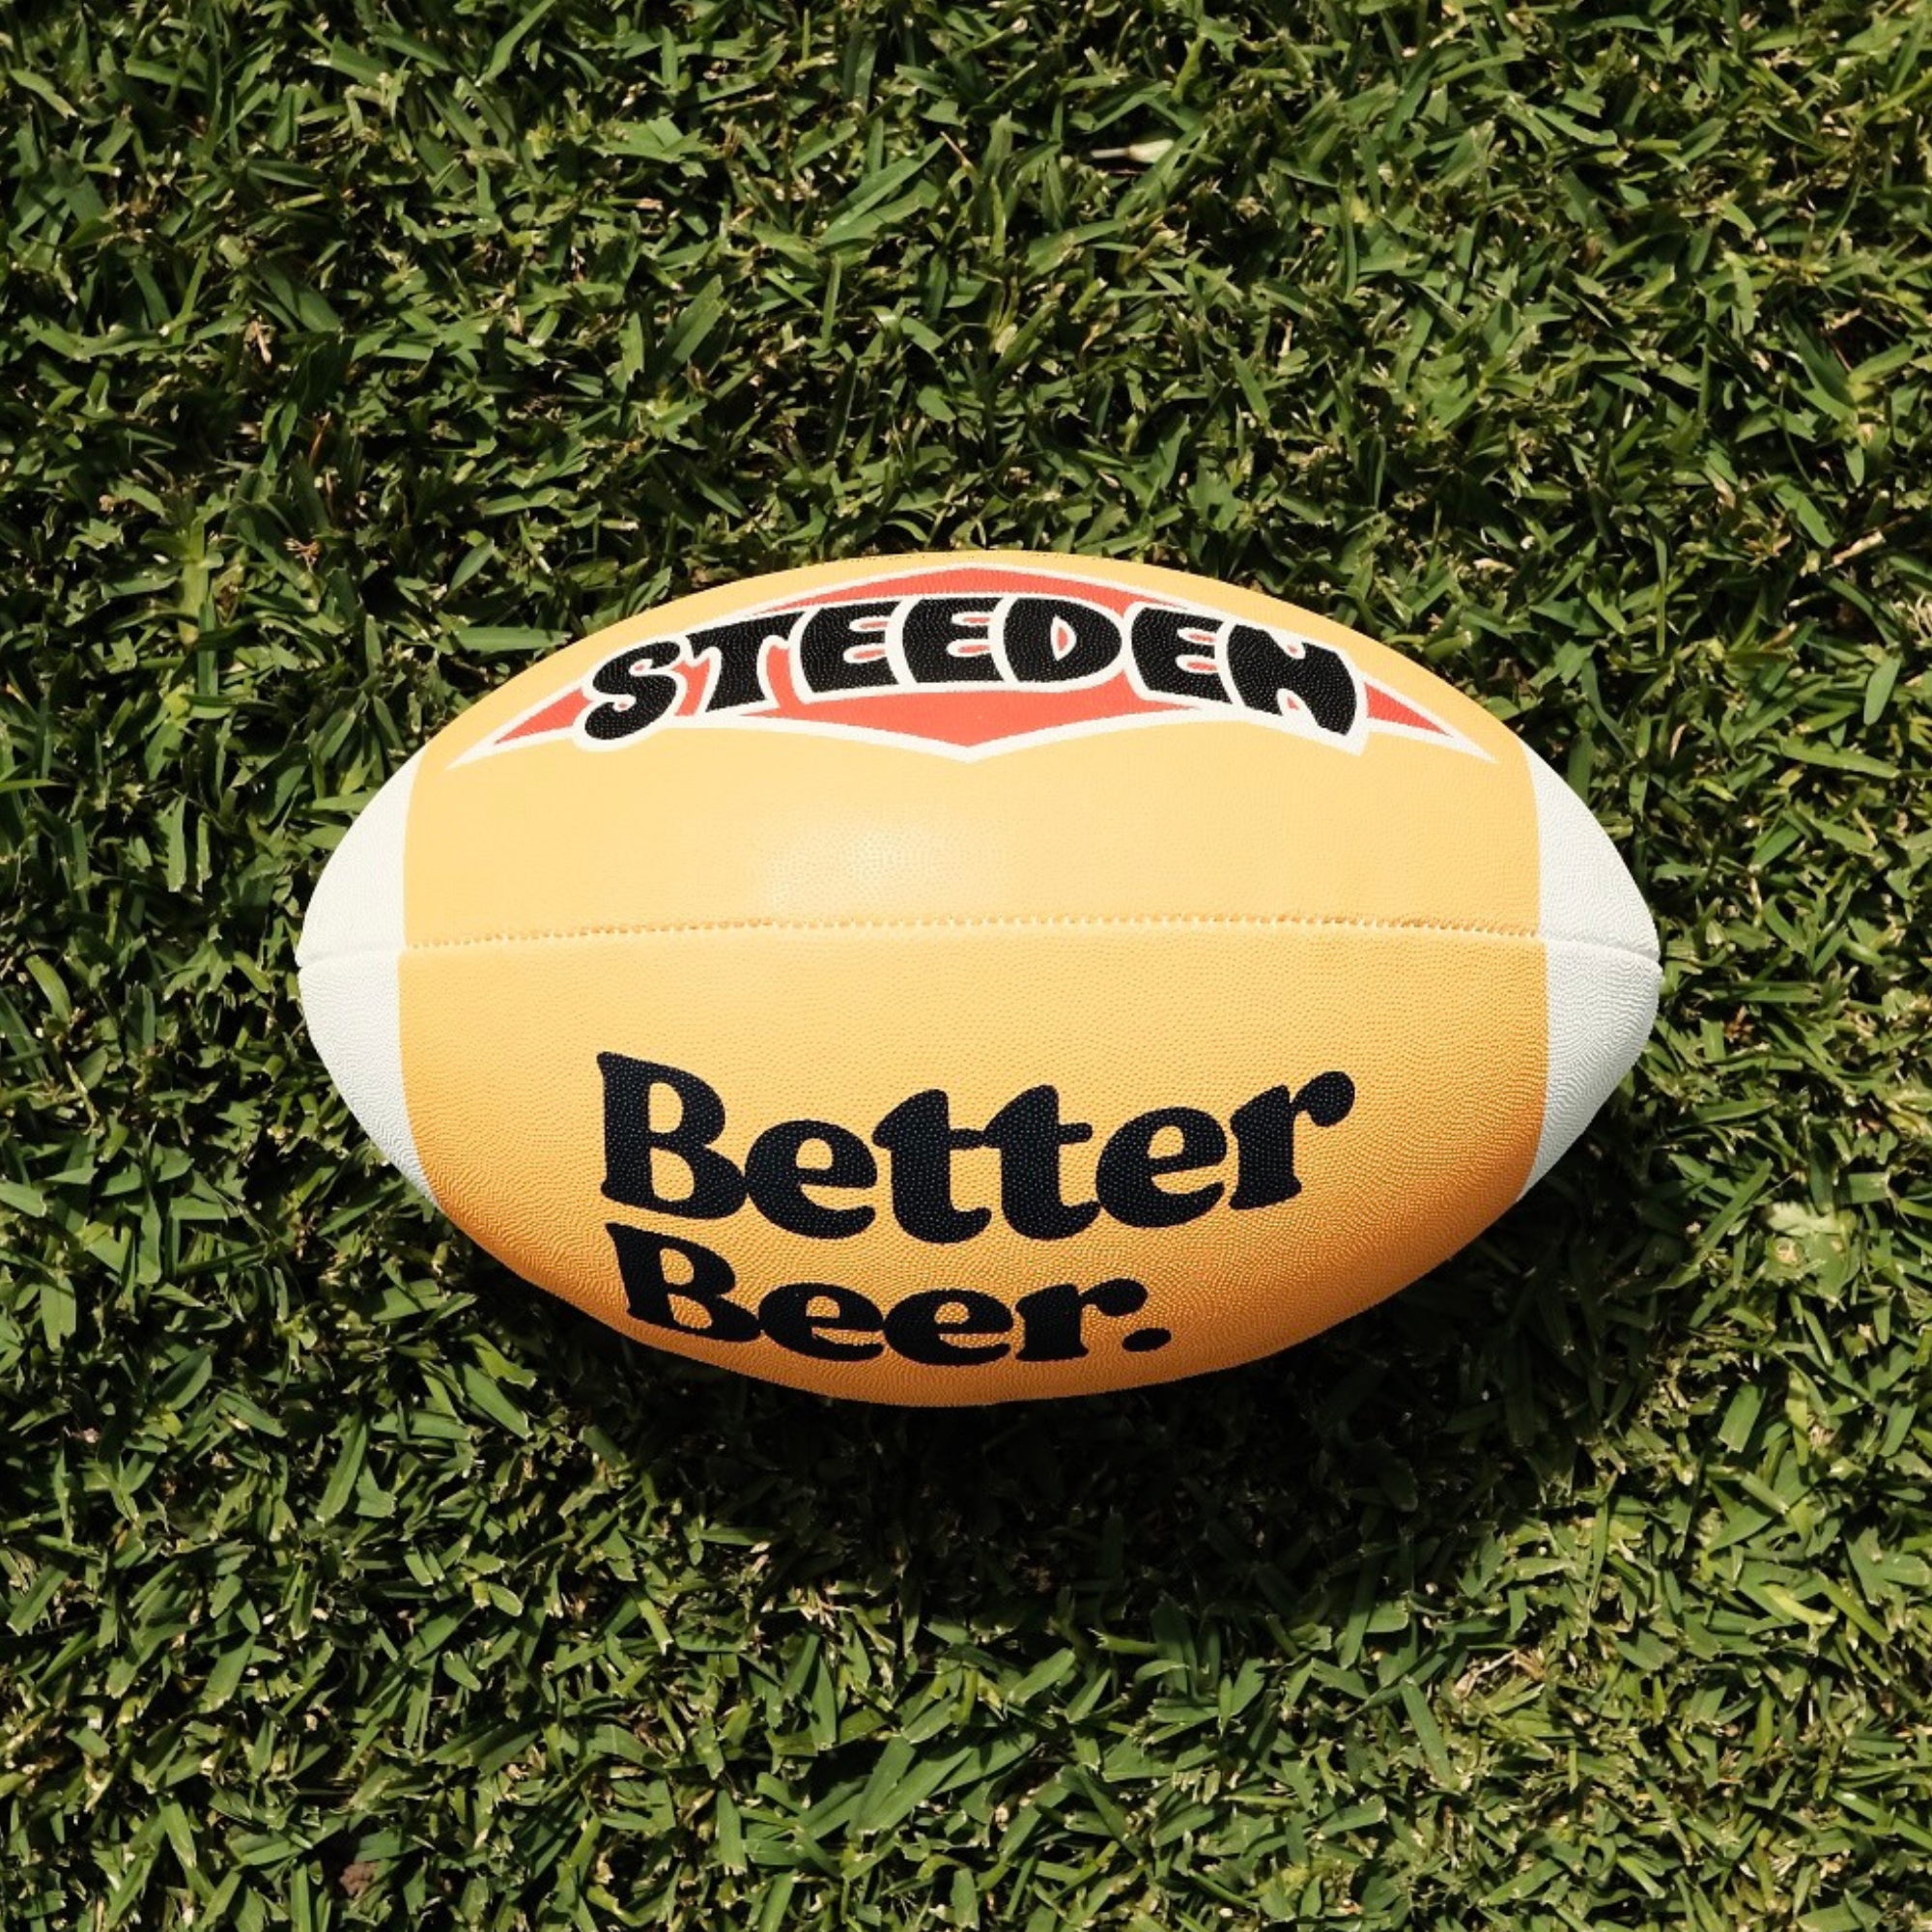 Steeden x Better Beer Rugby League Ball